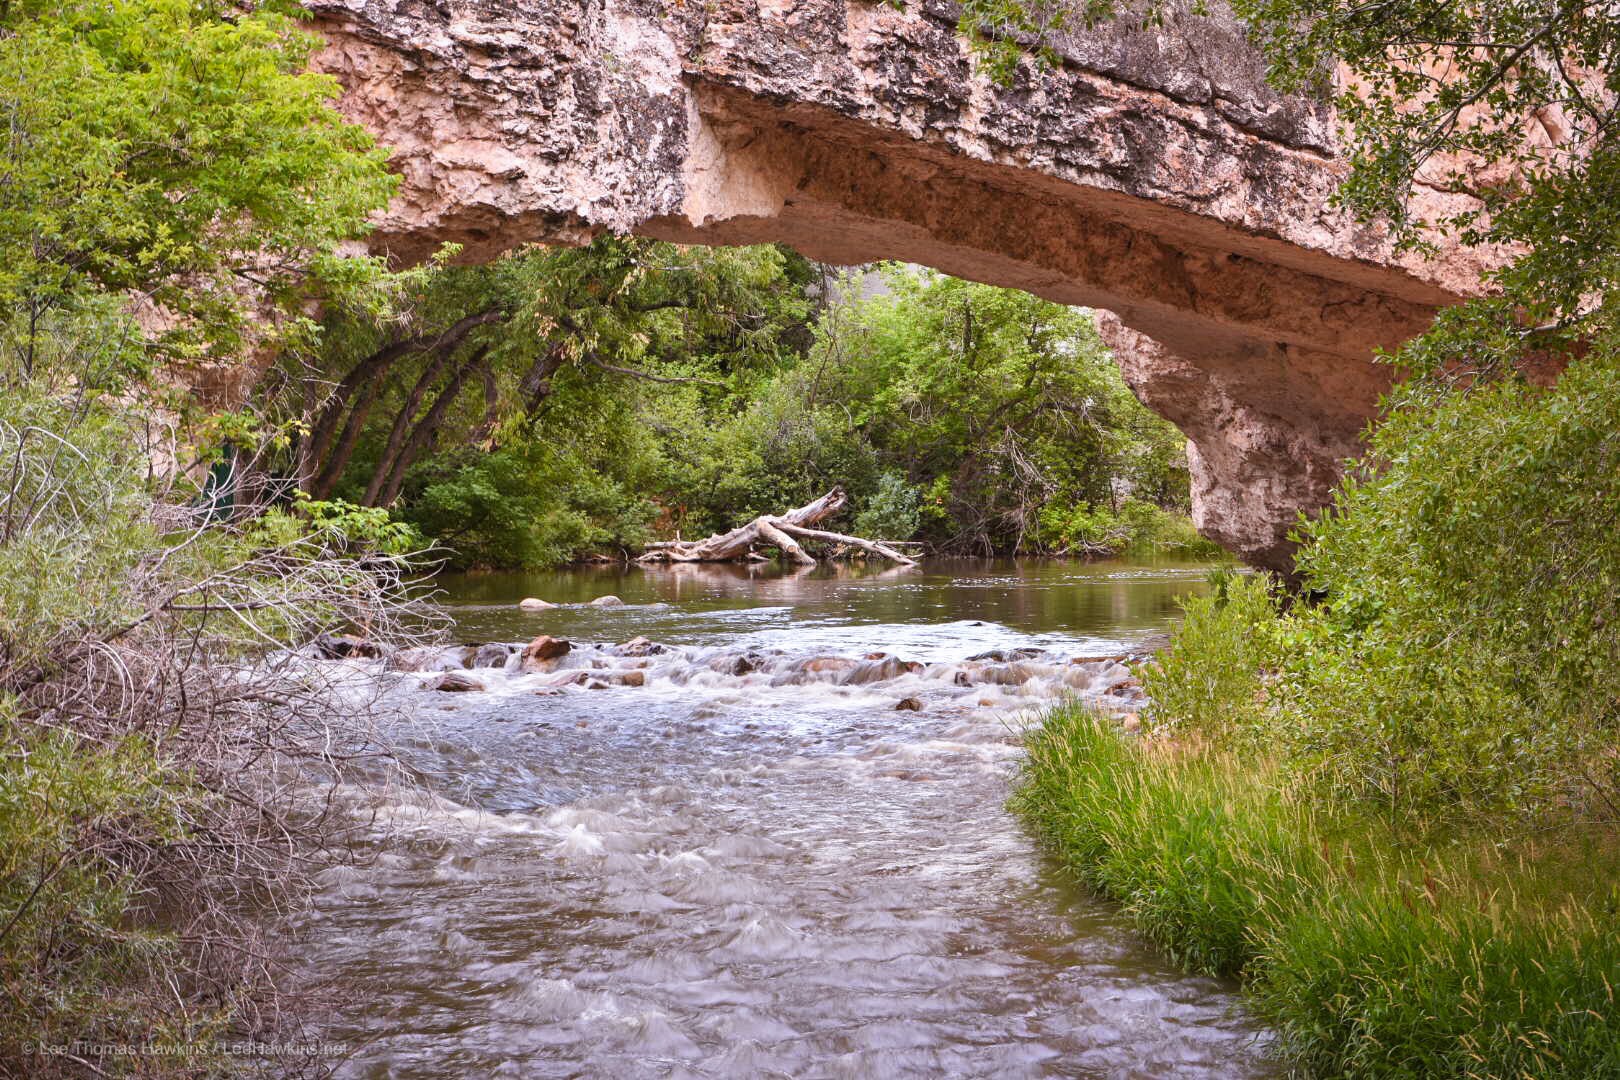 Rock extends over a river, forming a natural bridge.